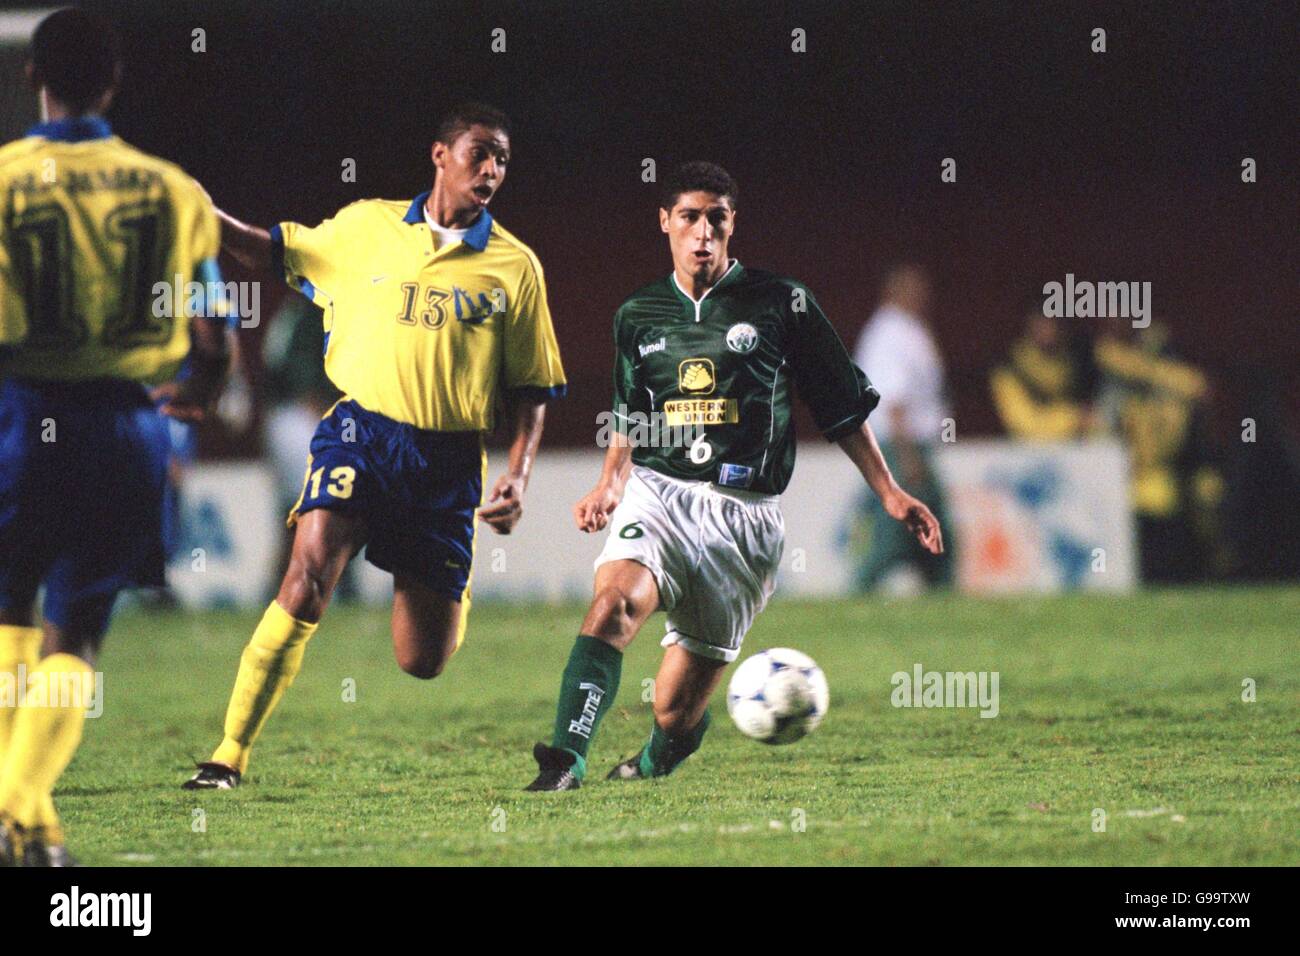 Football - Championnats du monde du Club de la FIFA - Groupe A - Al Nassr v Raja Casablanca.Youssef Safri de Raja Casablanca (à droite) joue le ballon en avant comme Ahmed Bahja d'Al Nassr (à gauche) Banque D'Images